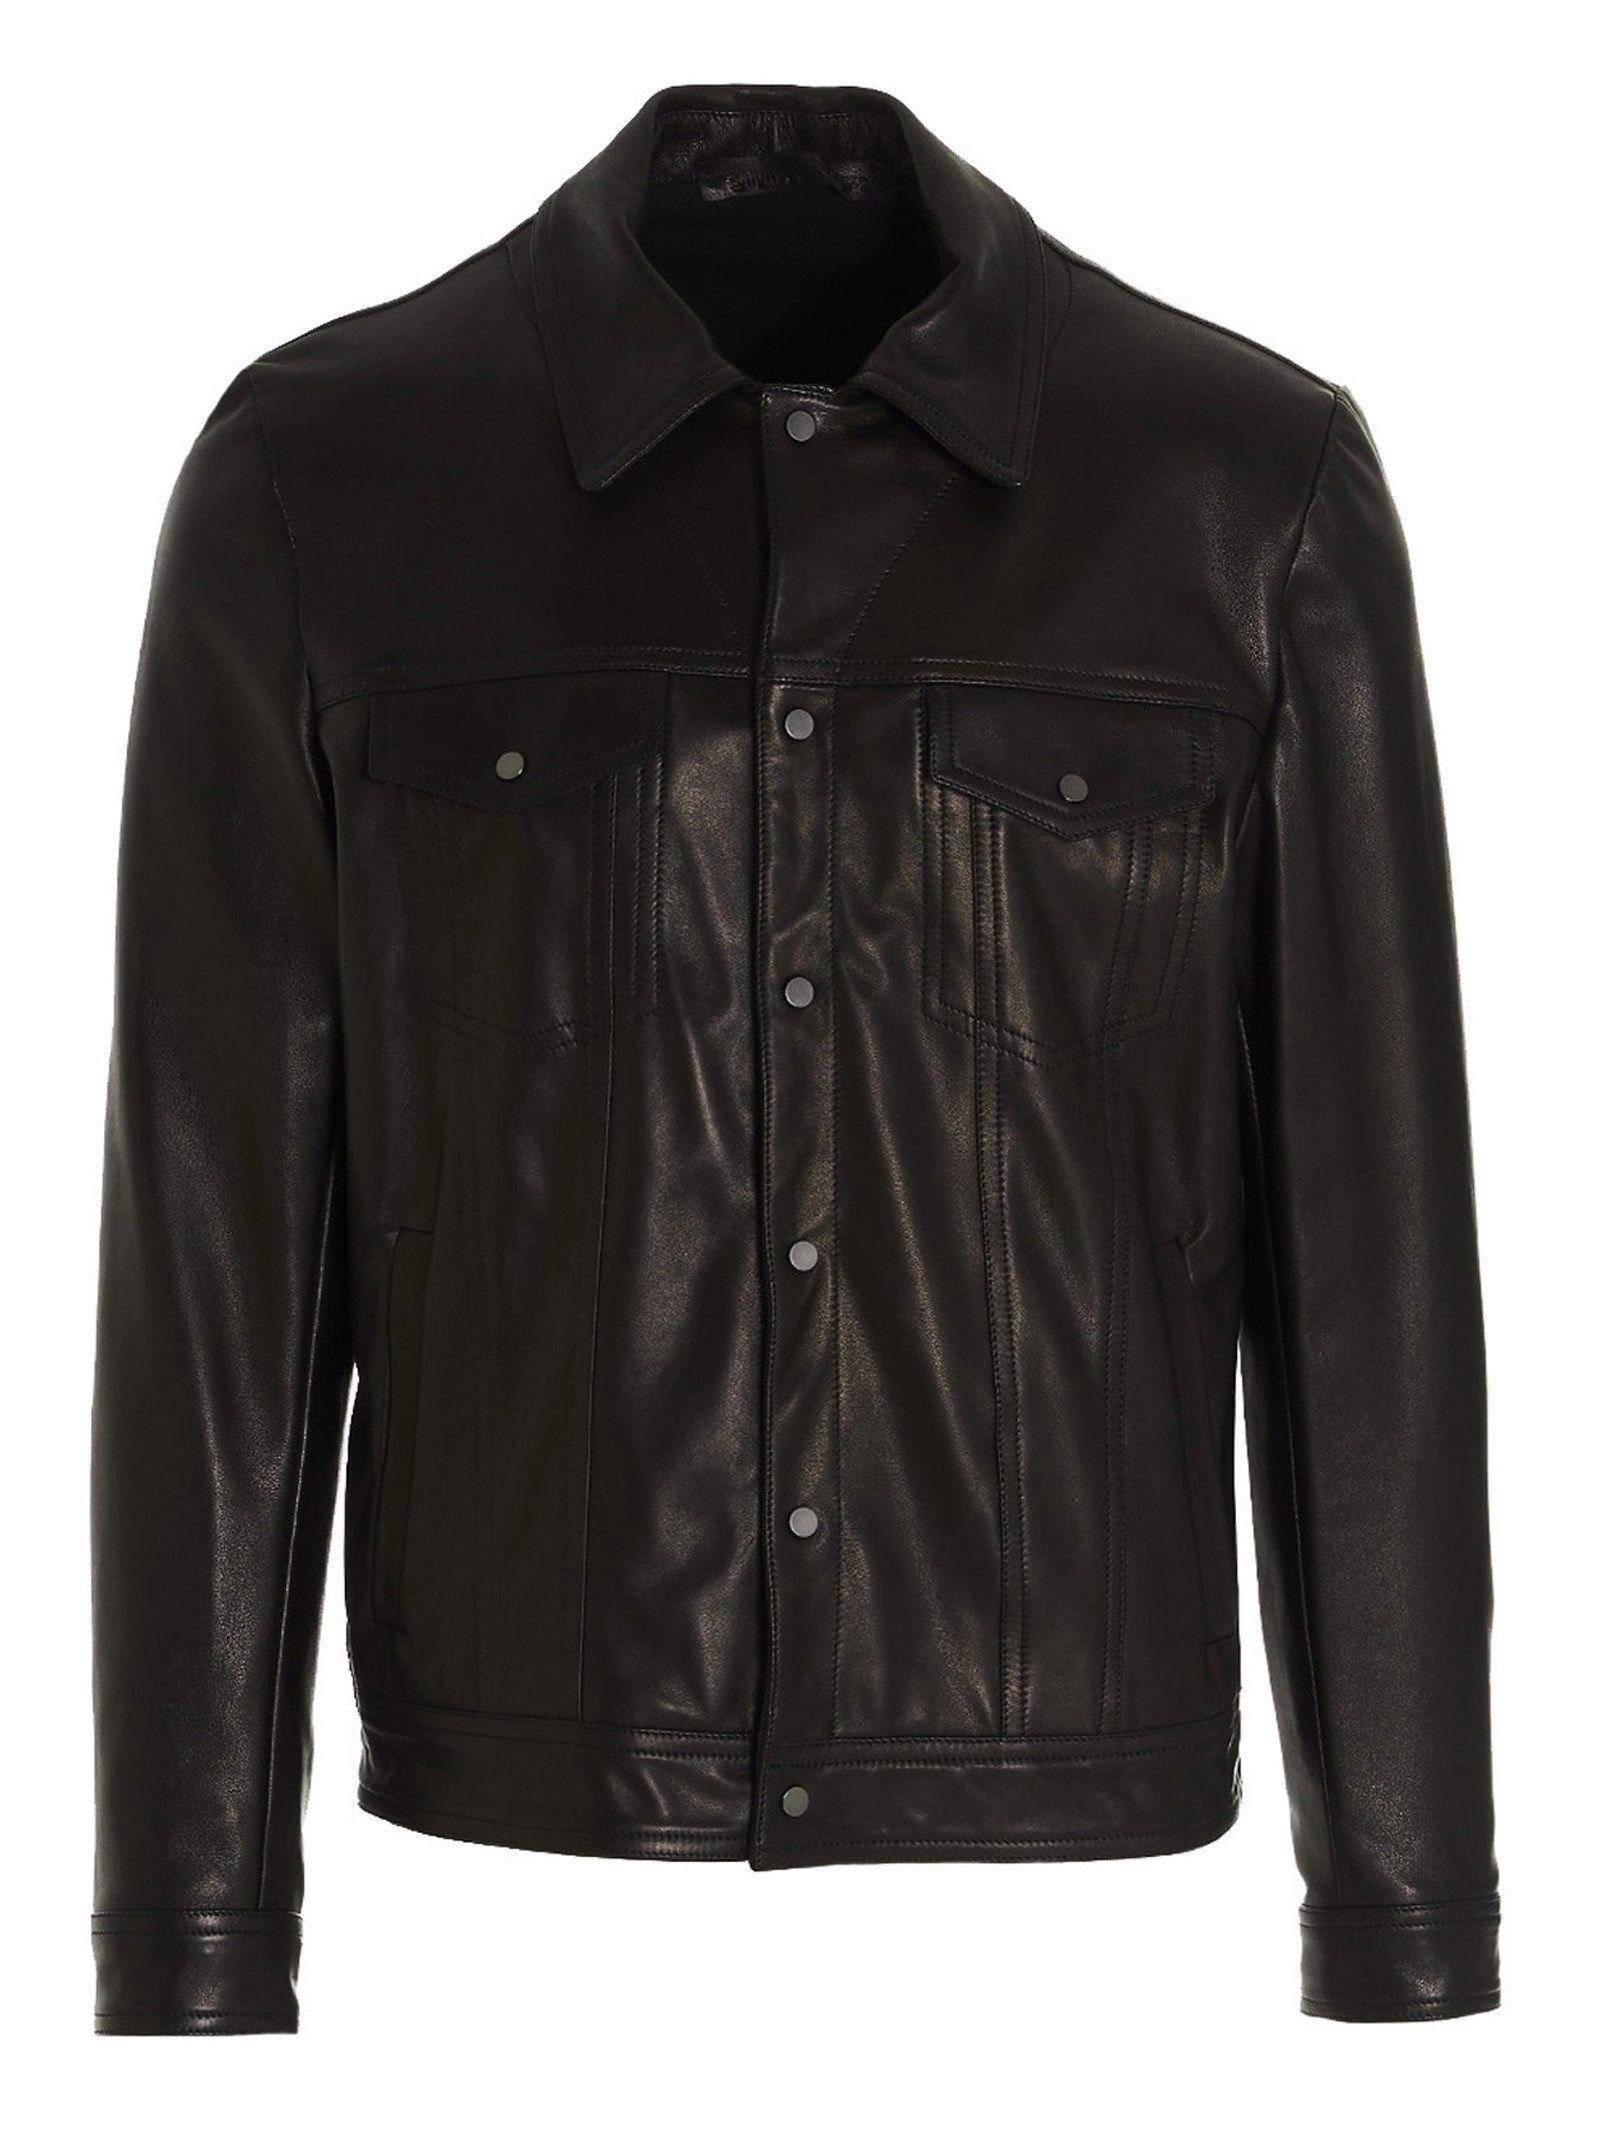 Salvatore Santoro 39543napa Leather Jacket in Black for Men - Lyst